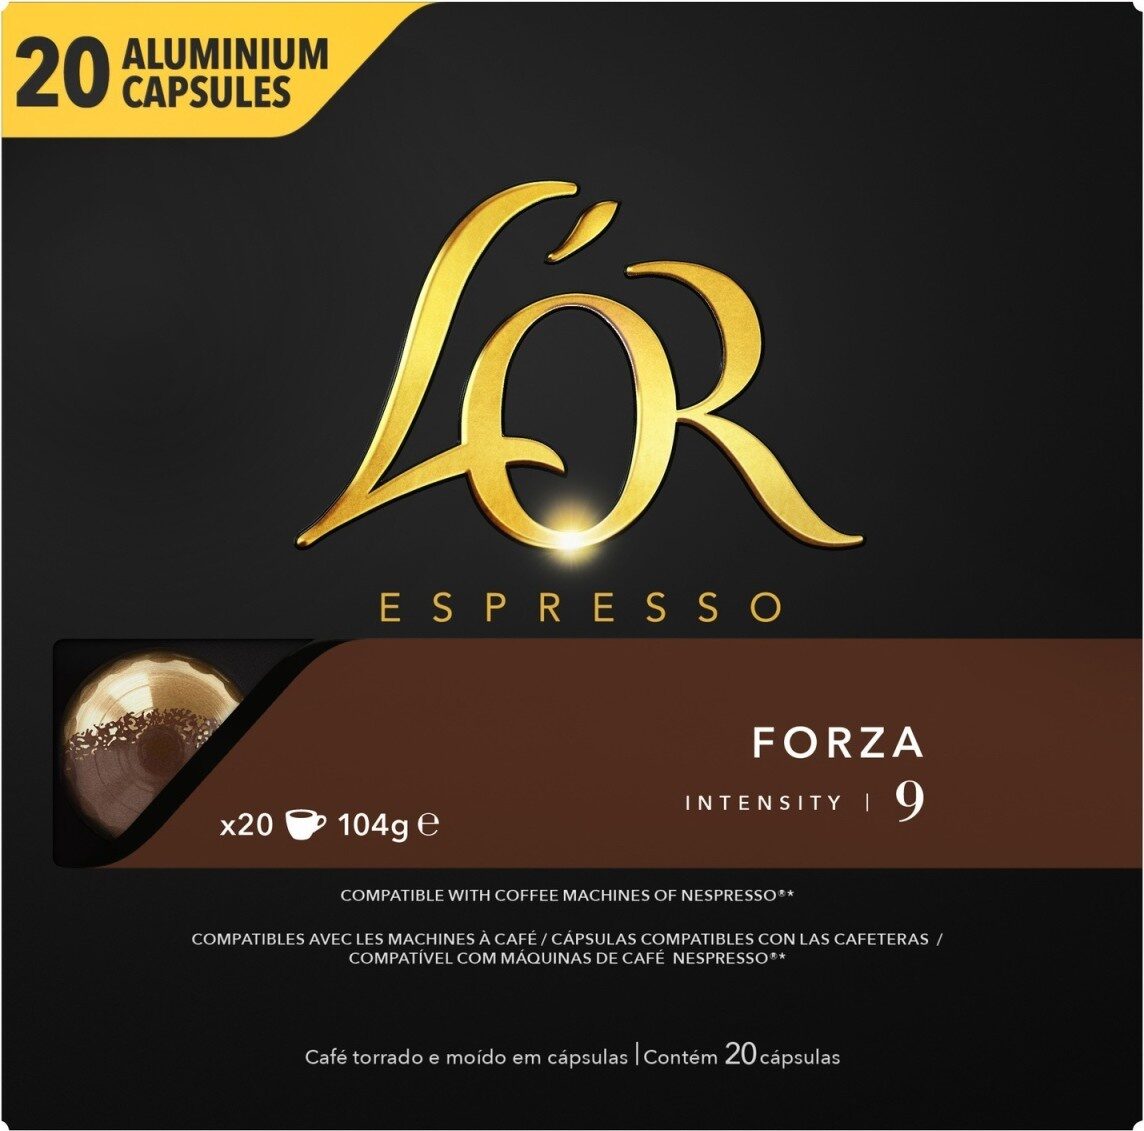 L'or espresso forza - Product - fr